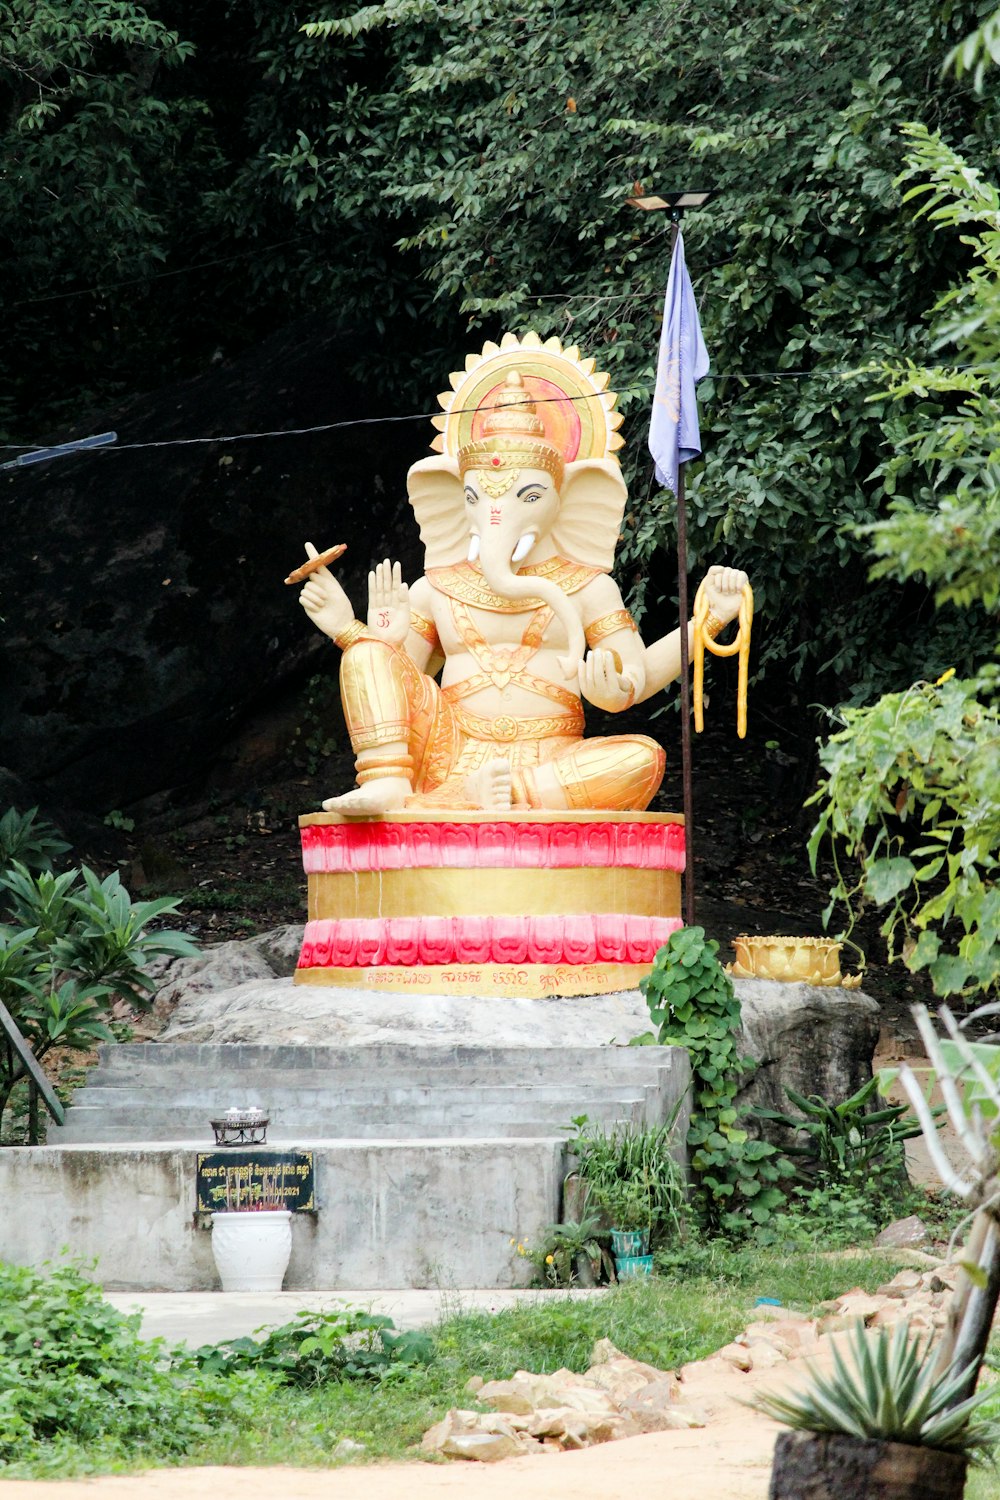 a statue of an elephant in a garden